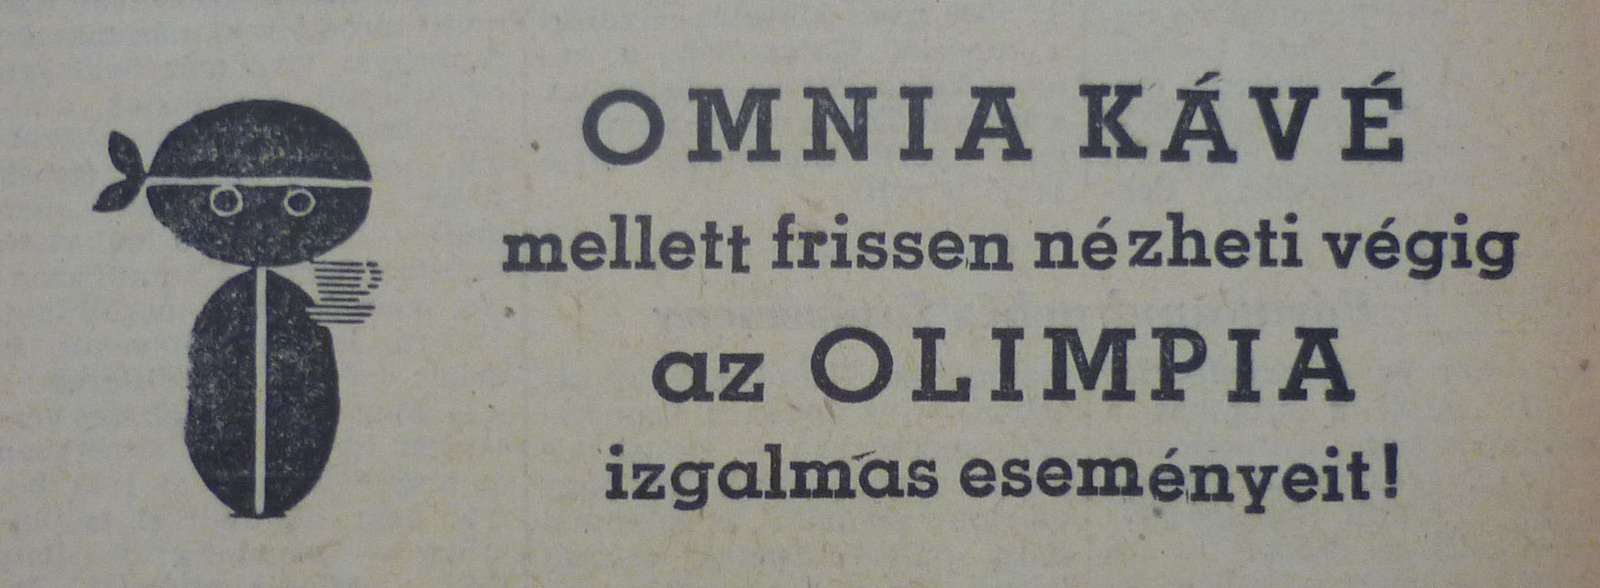 OmniaKave-196810-MagyarNemzetHirdetes